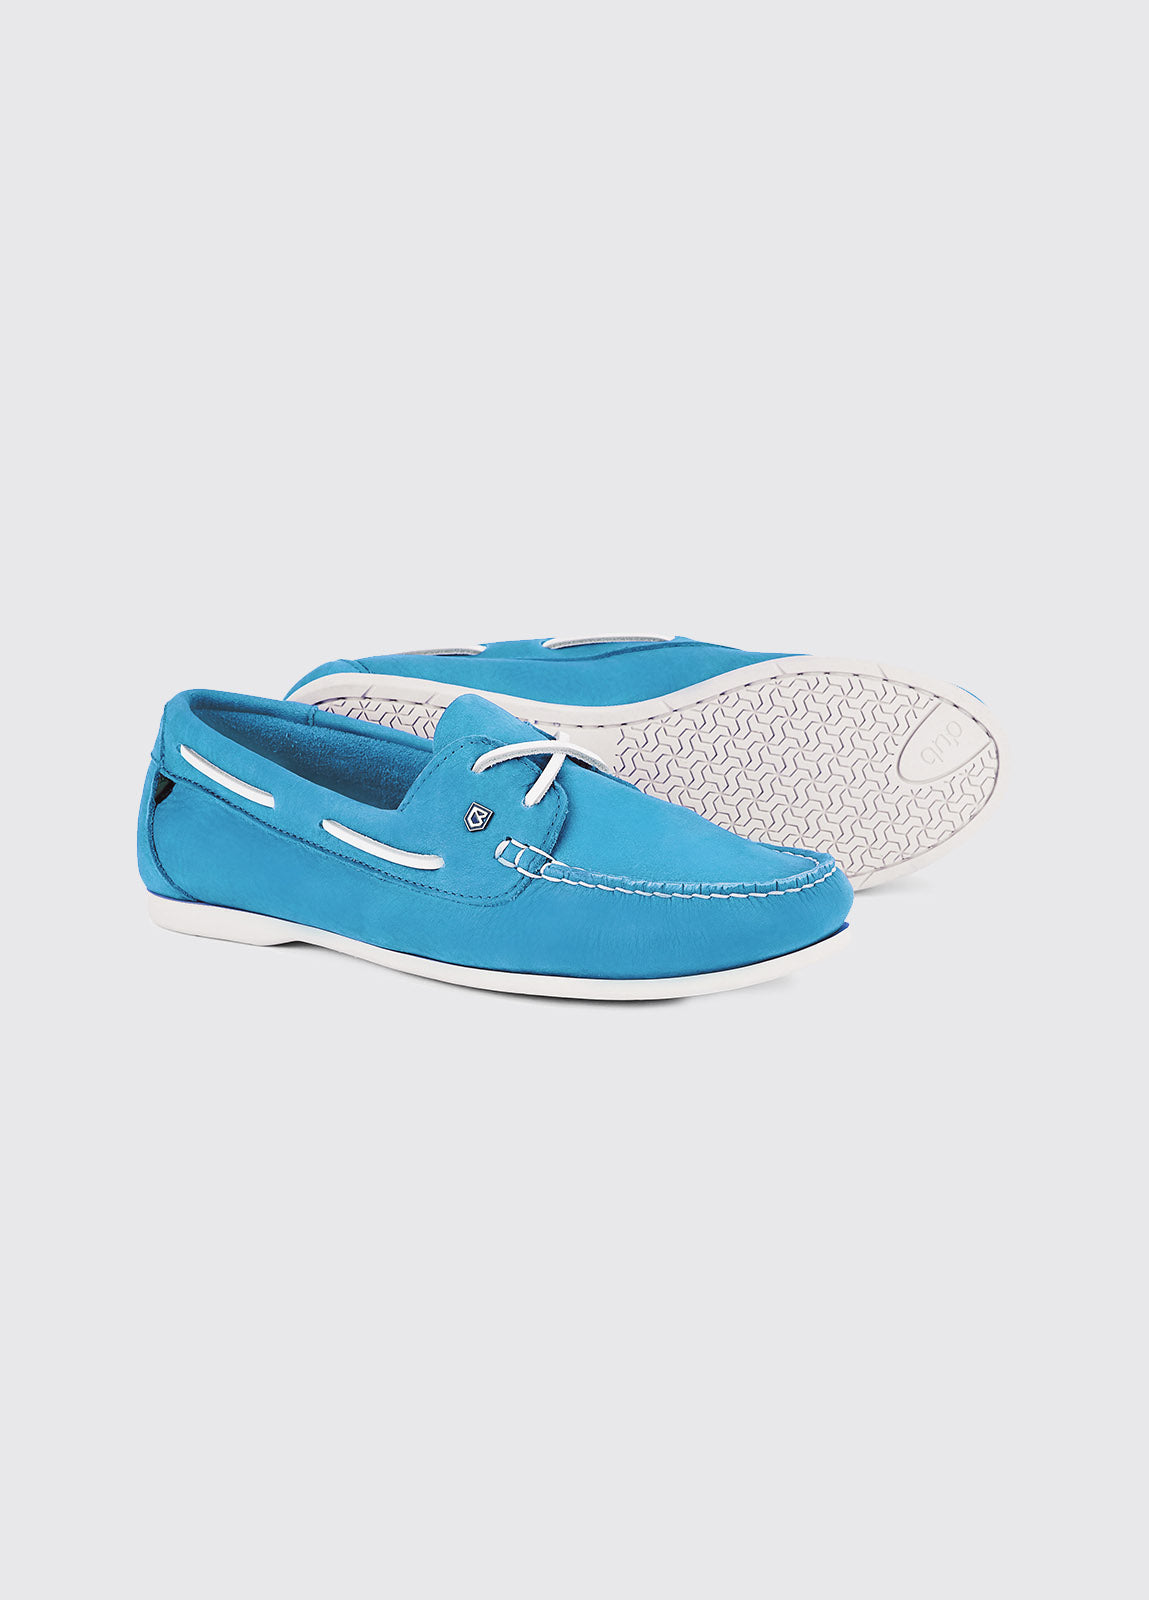 Aruba Deck Shoe - Blue Mist